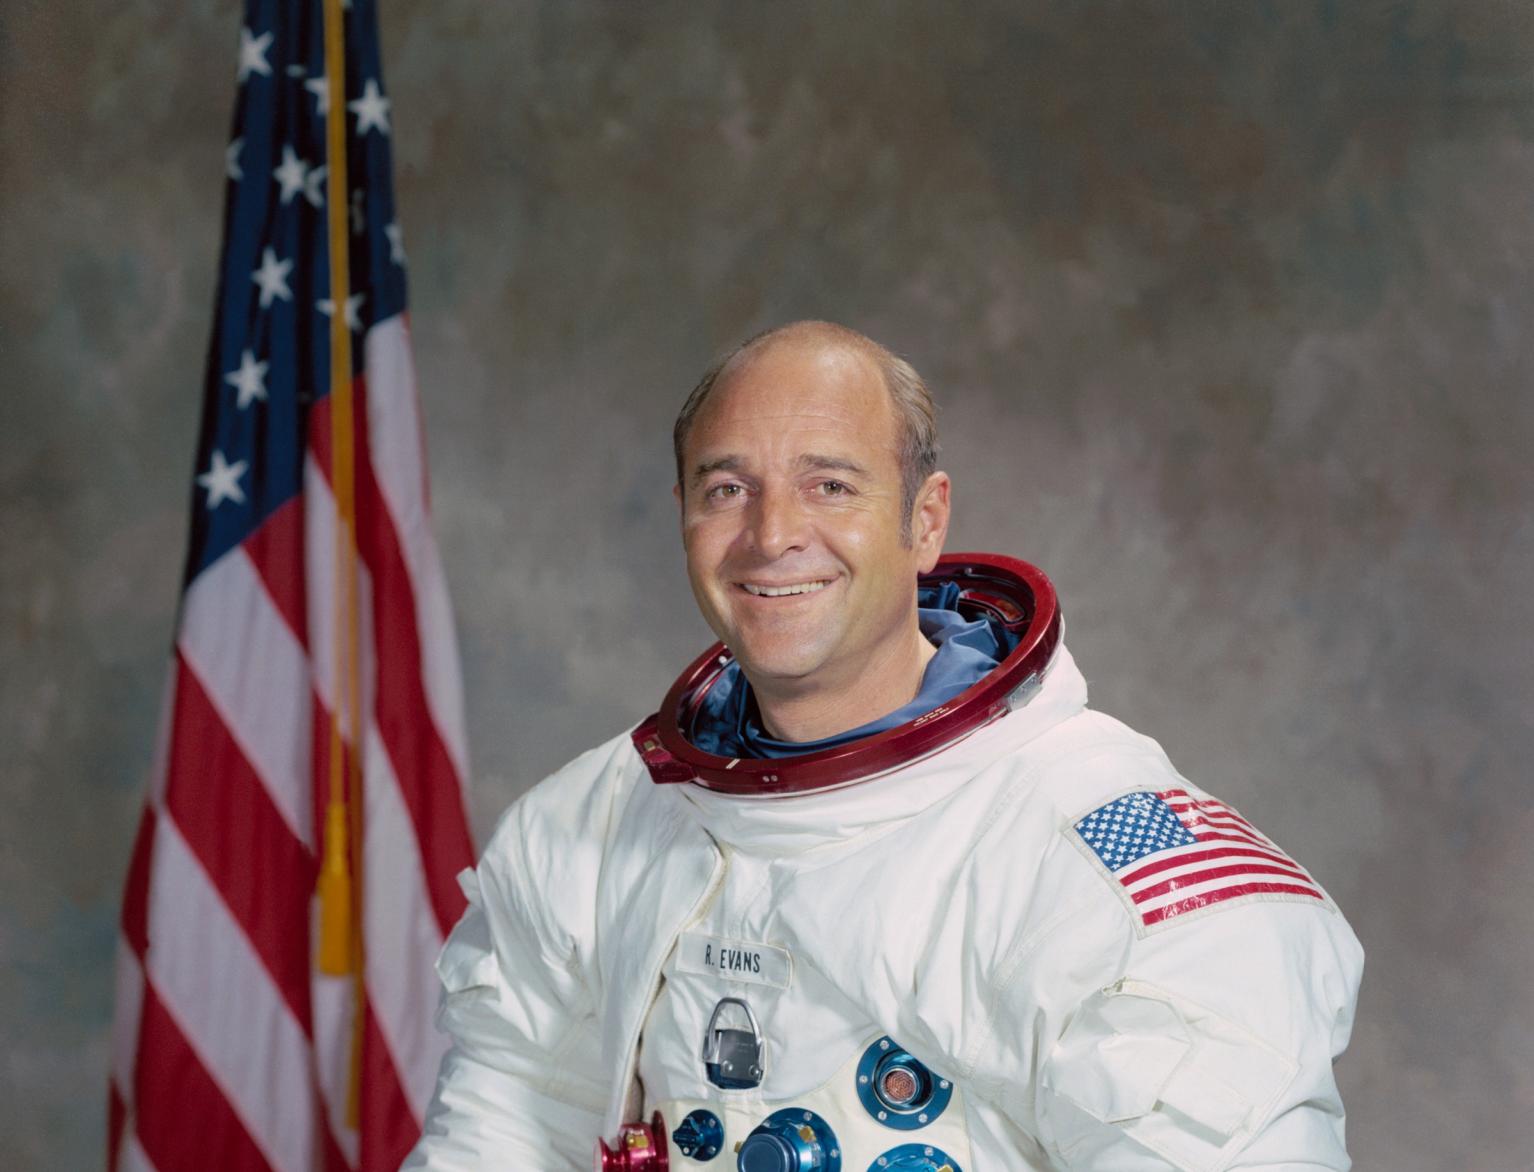 Astronaut Ronald E. Evans